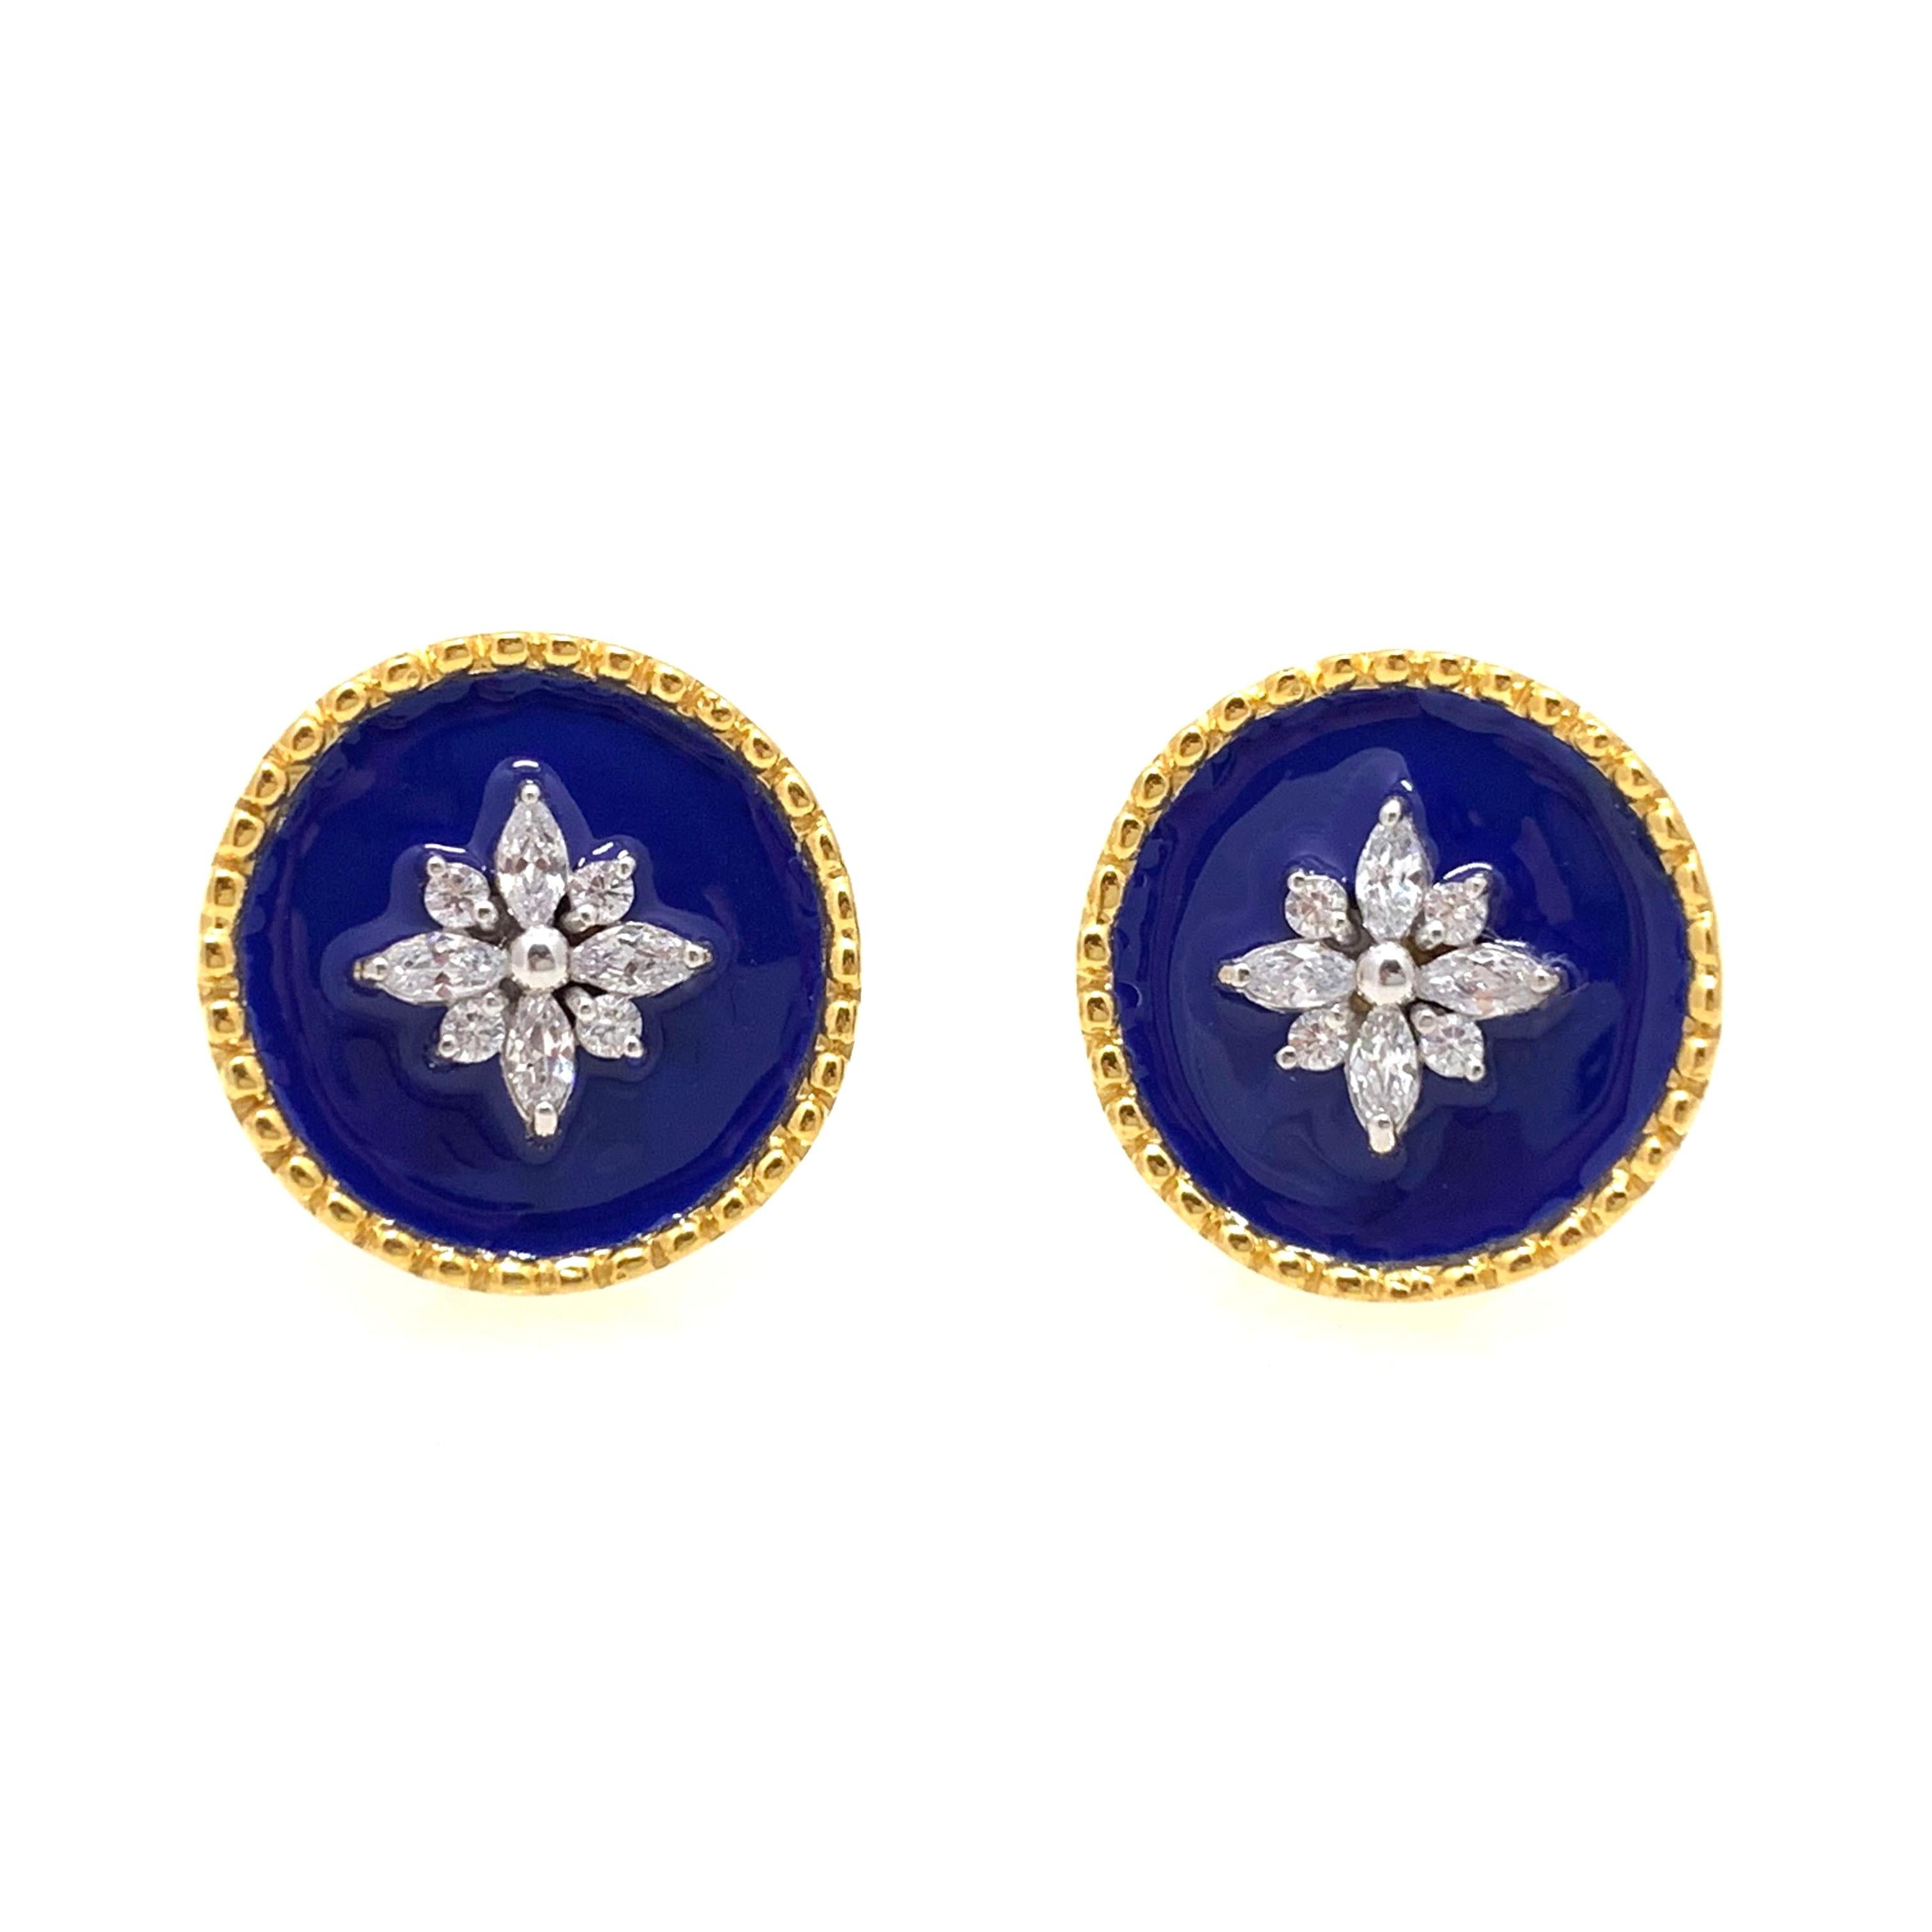 Contemporary Royal Blue Enamel Flower Round Disc Sterling Silver Earrings